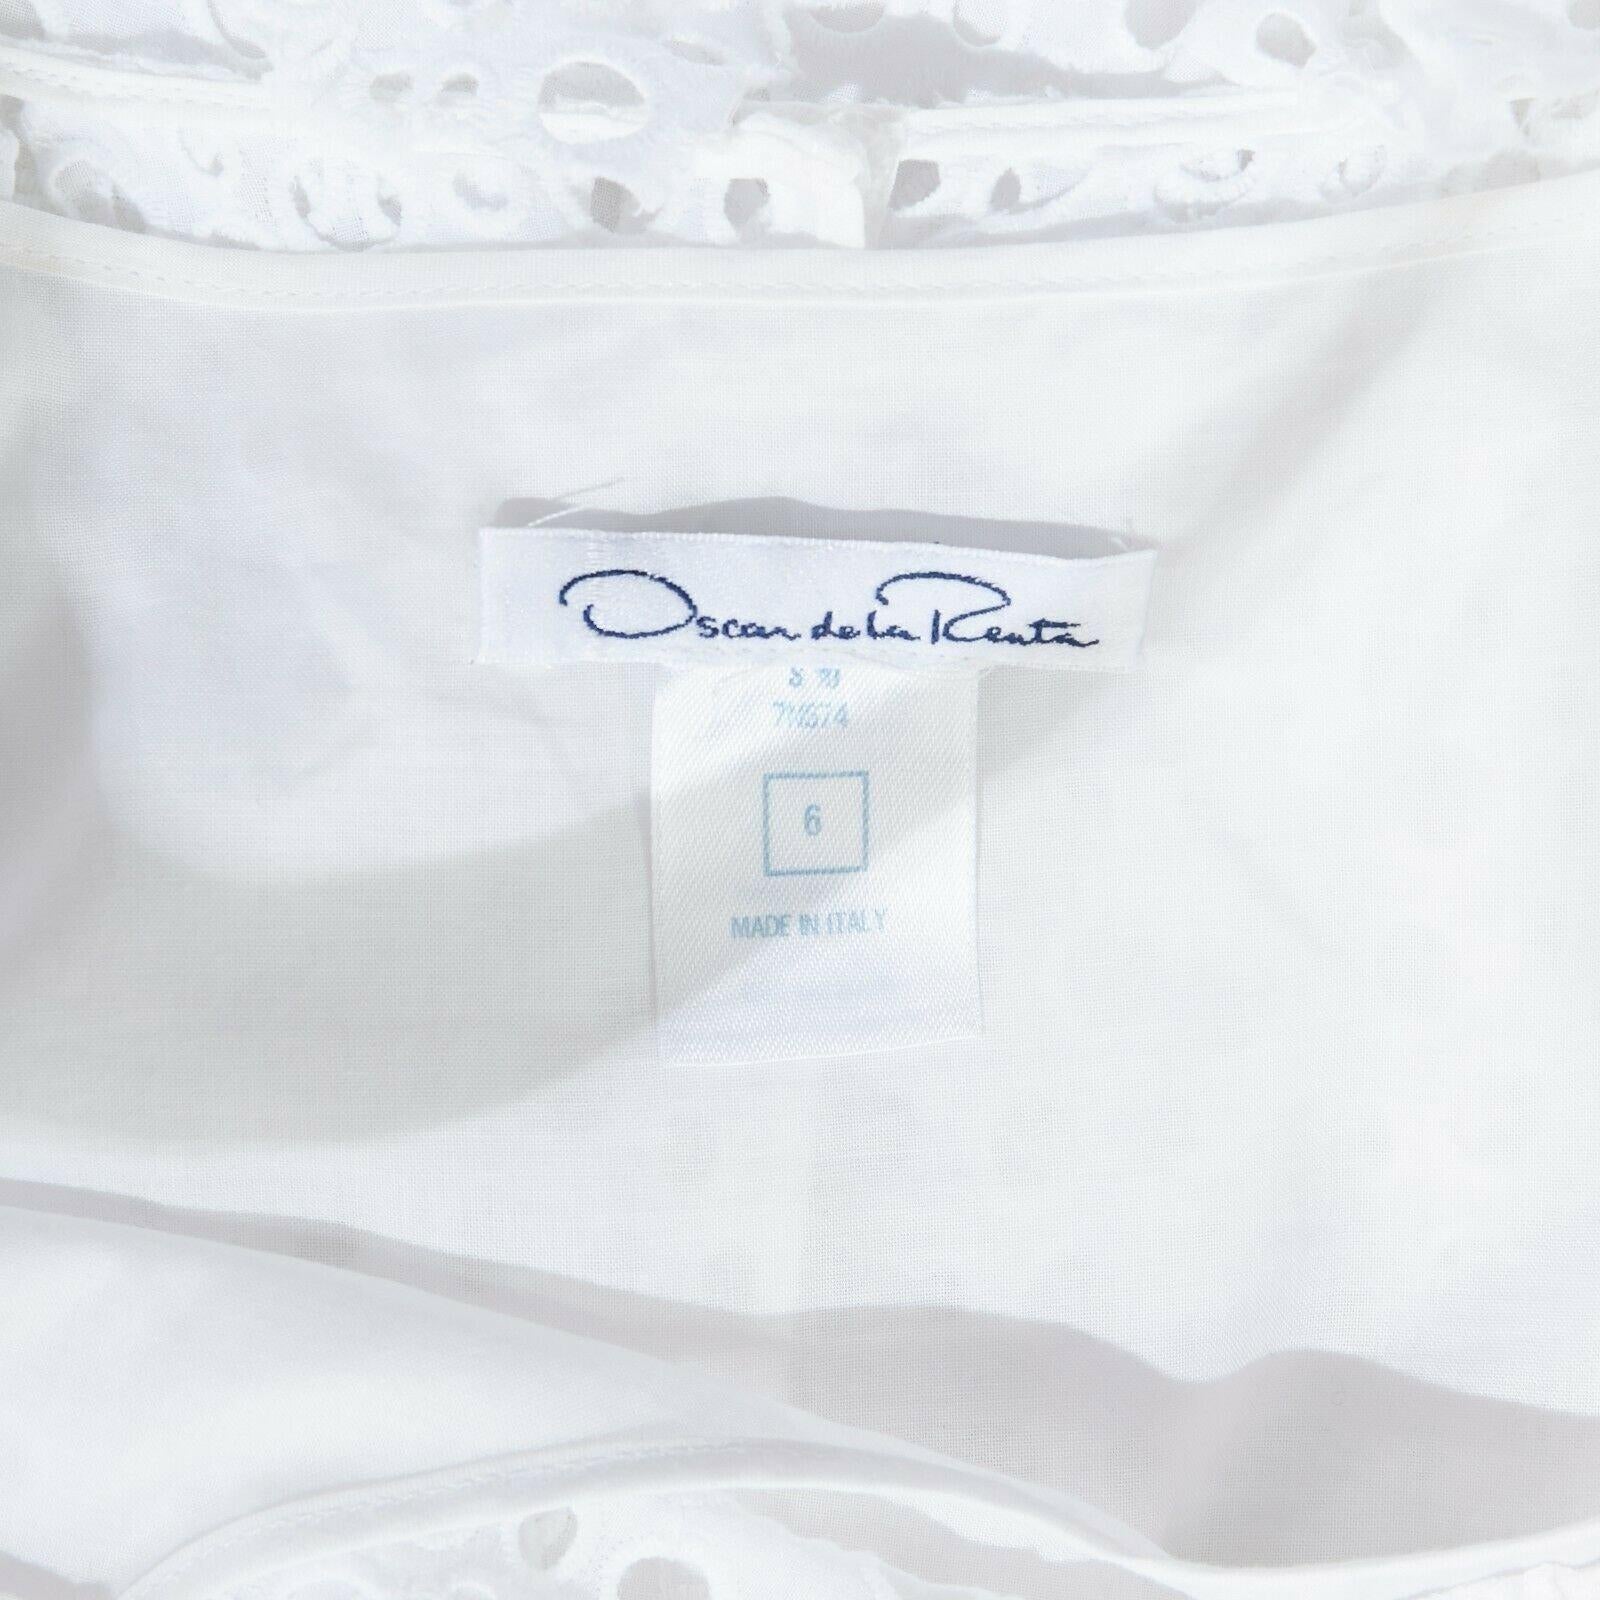 OSCAR DE LA RENTA SS10 white embroidery eyelet ruffle trimmed cocktail dress US6 8